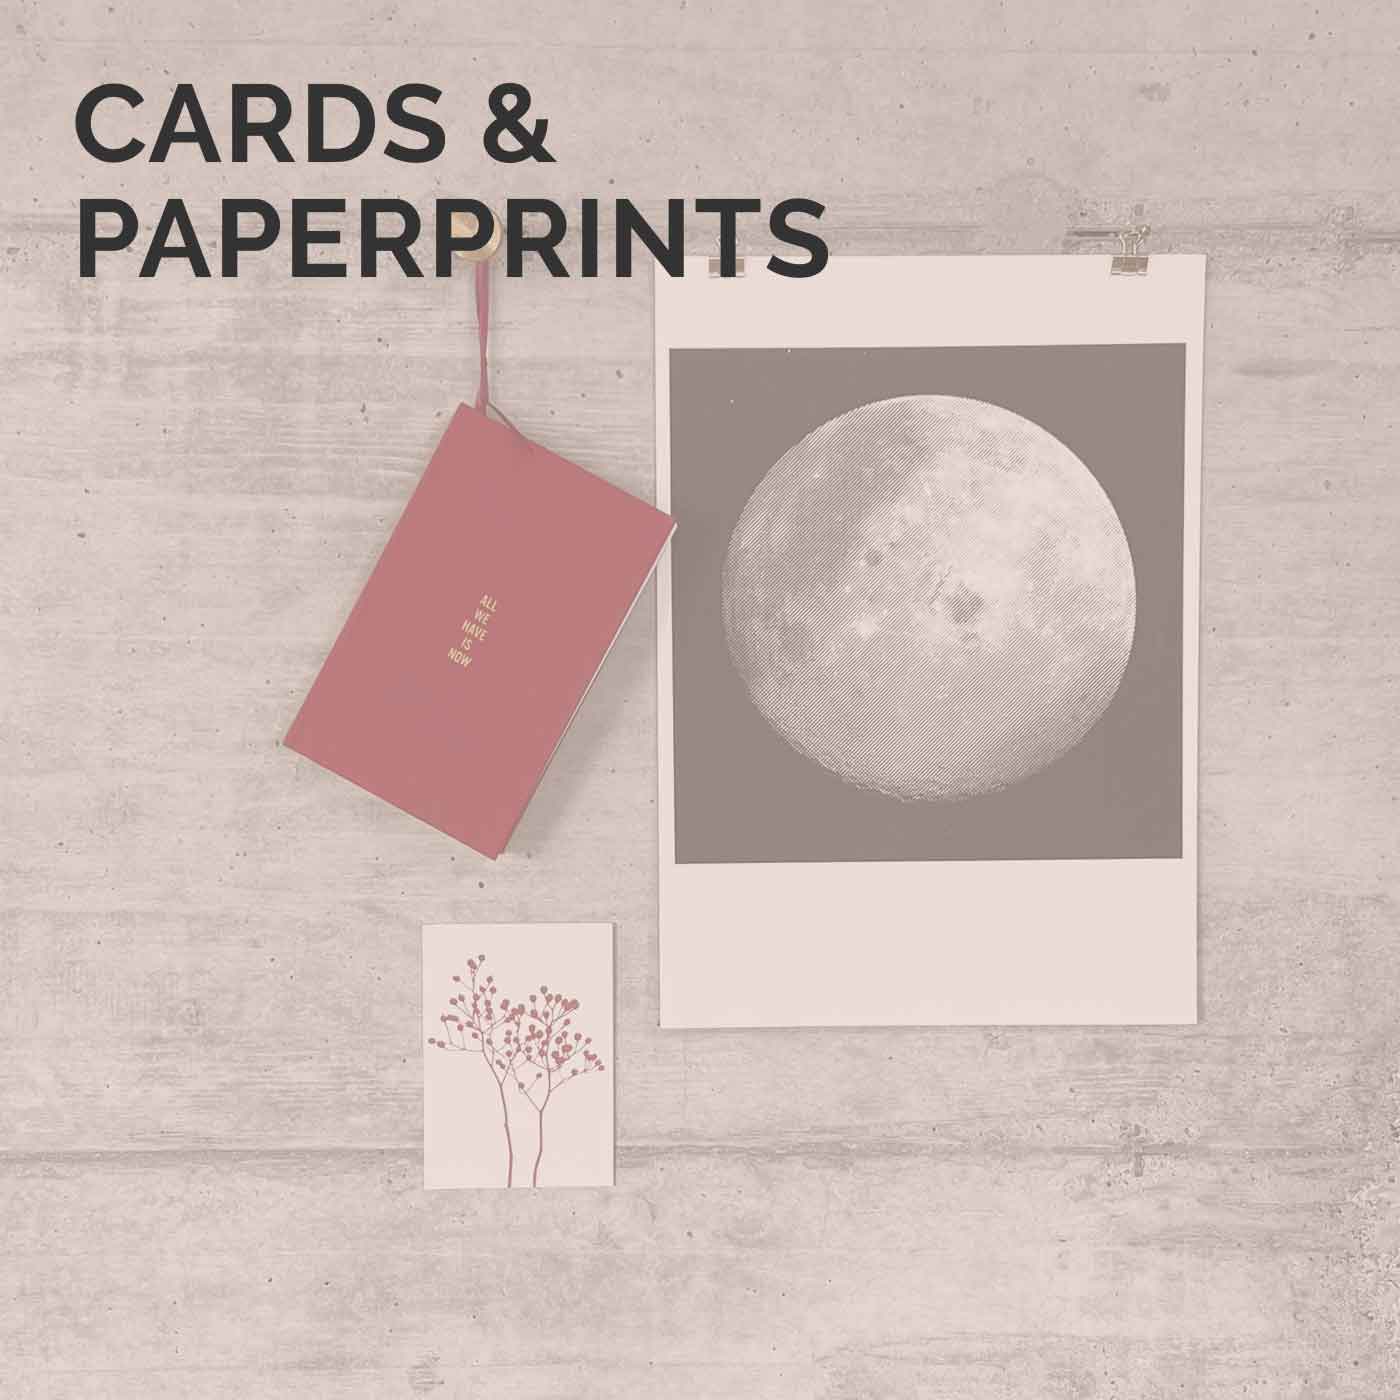 Cards & Paperprints